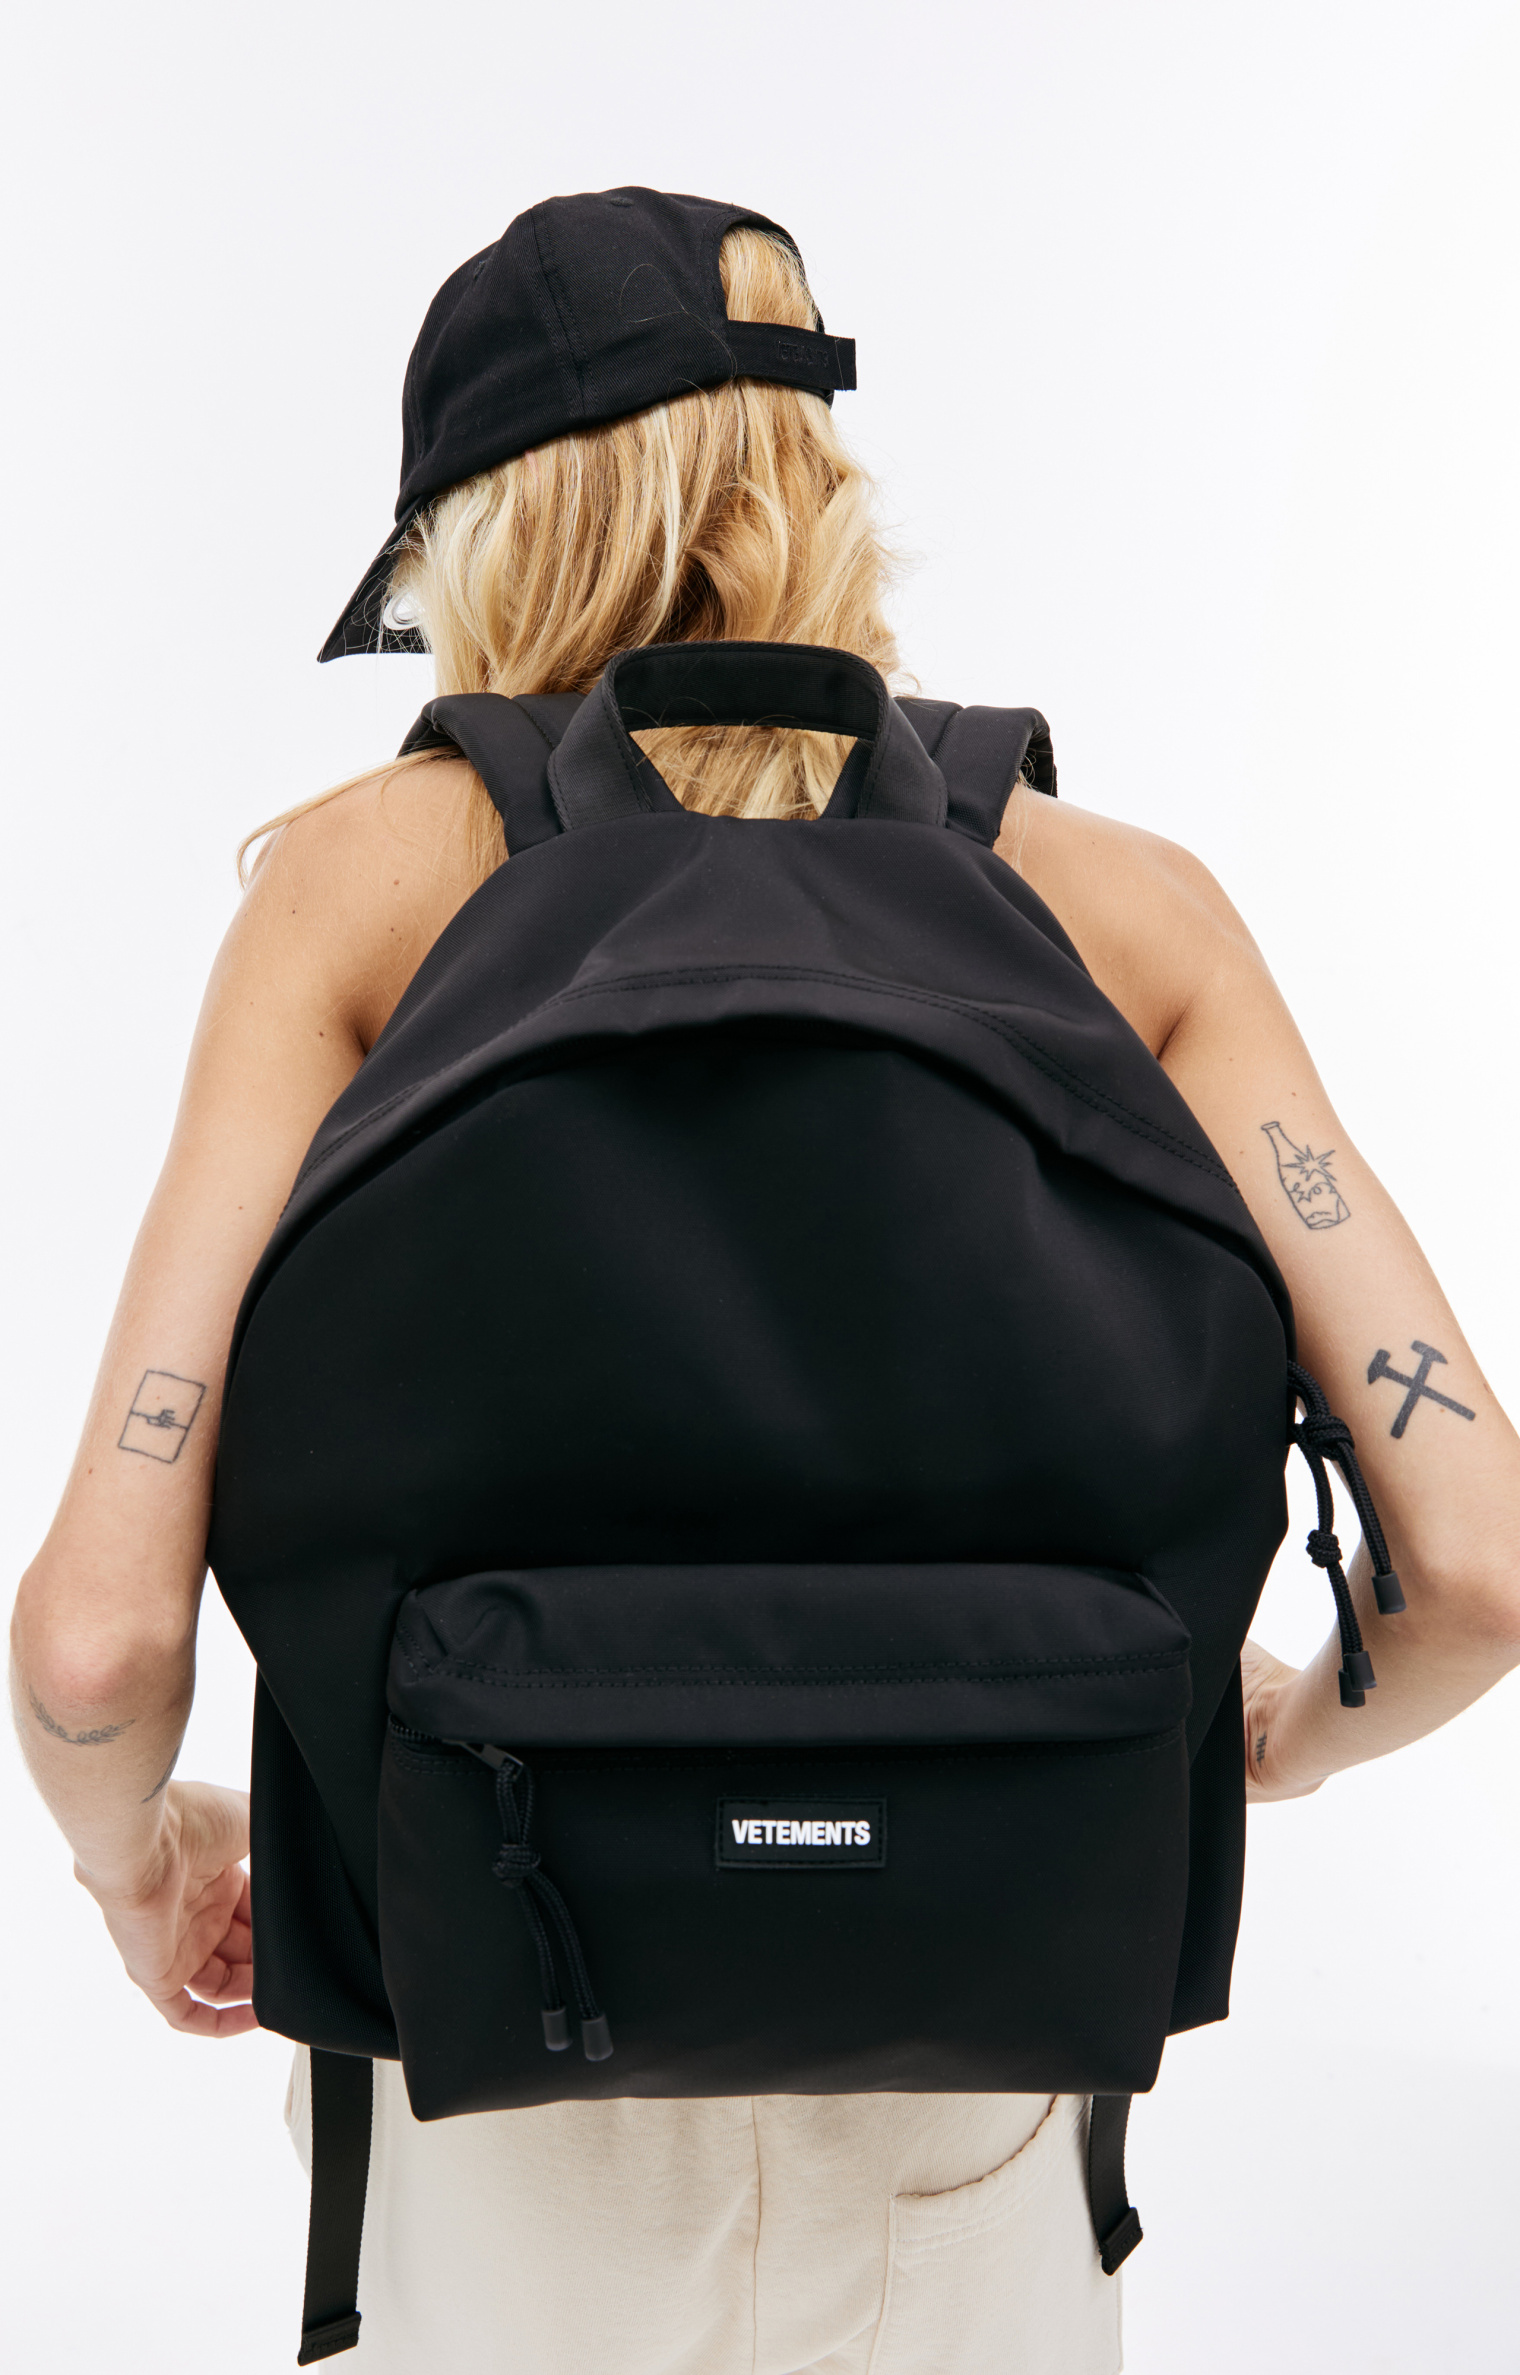 VETEMENTS Black logo backpack